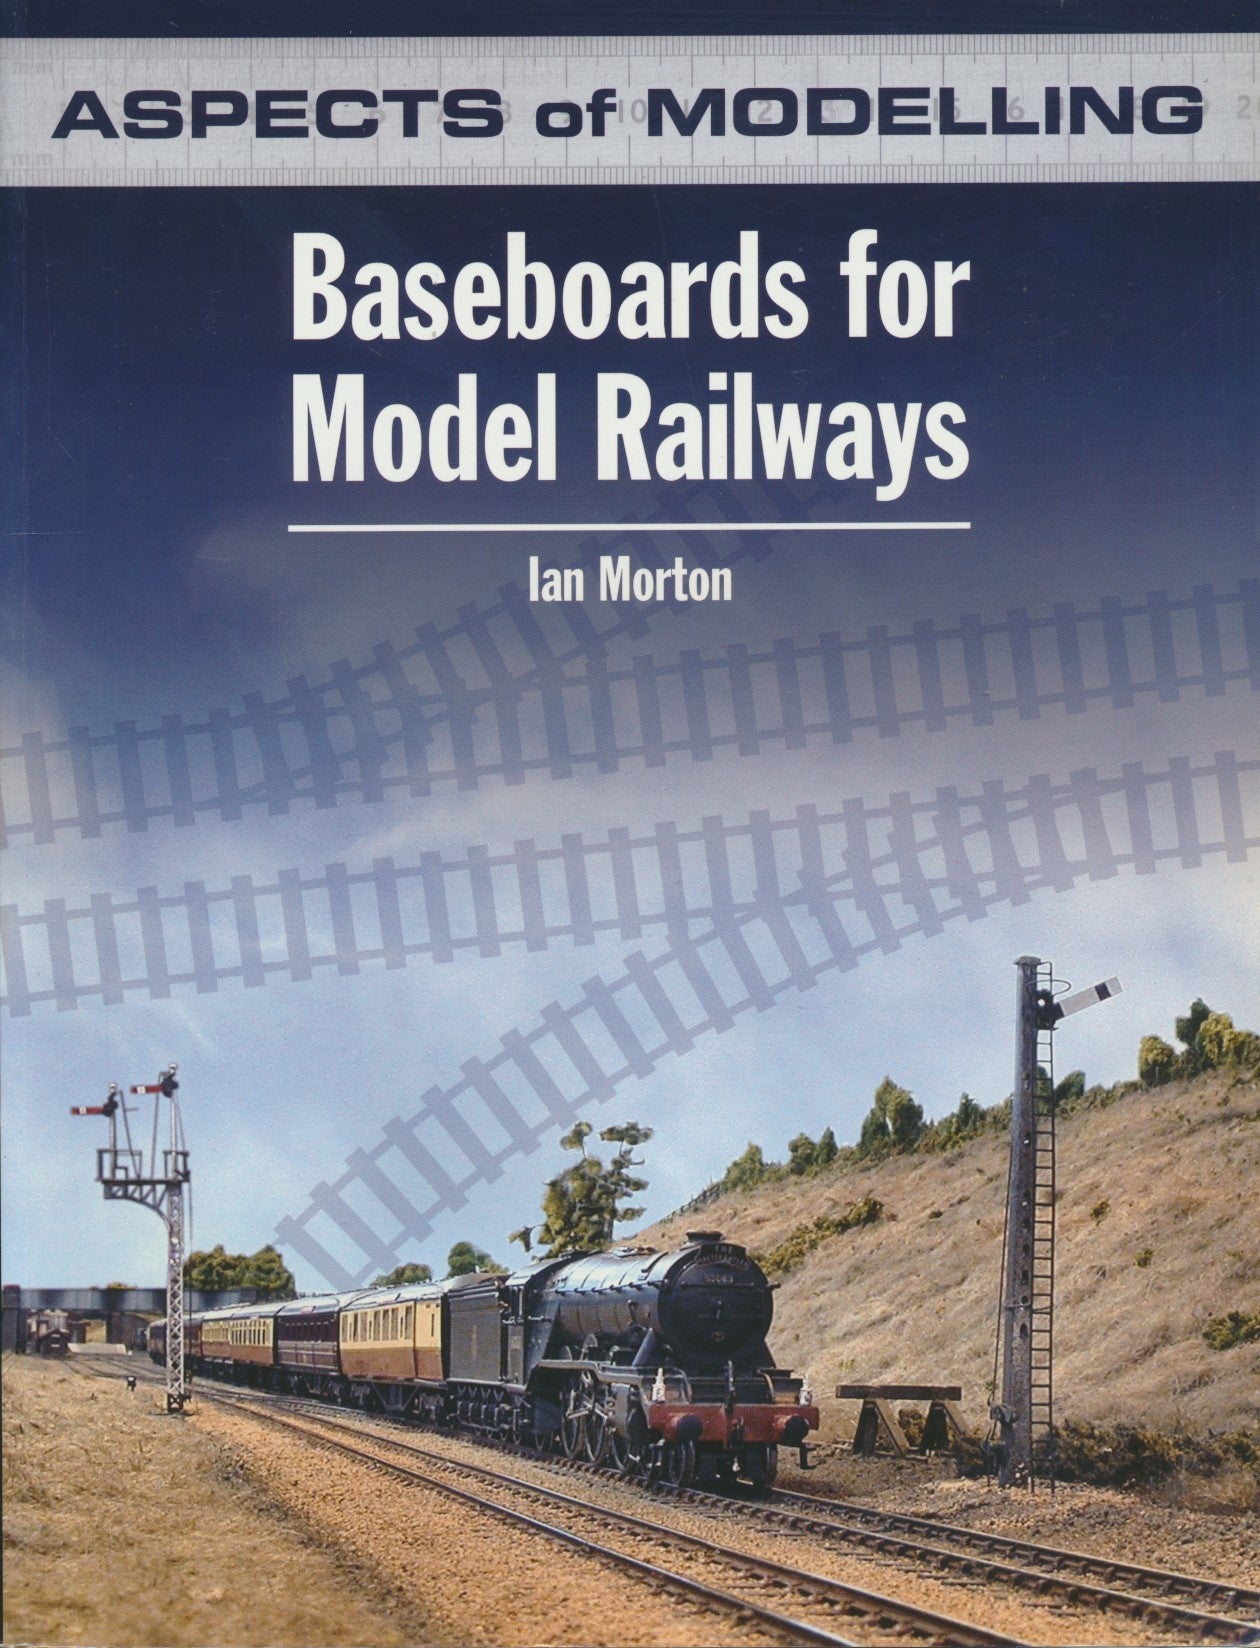 Baseboards for Model Railways (Aspects of Modelling)